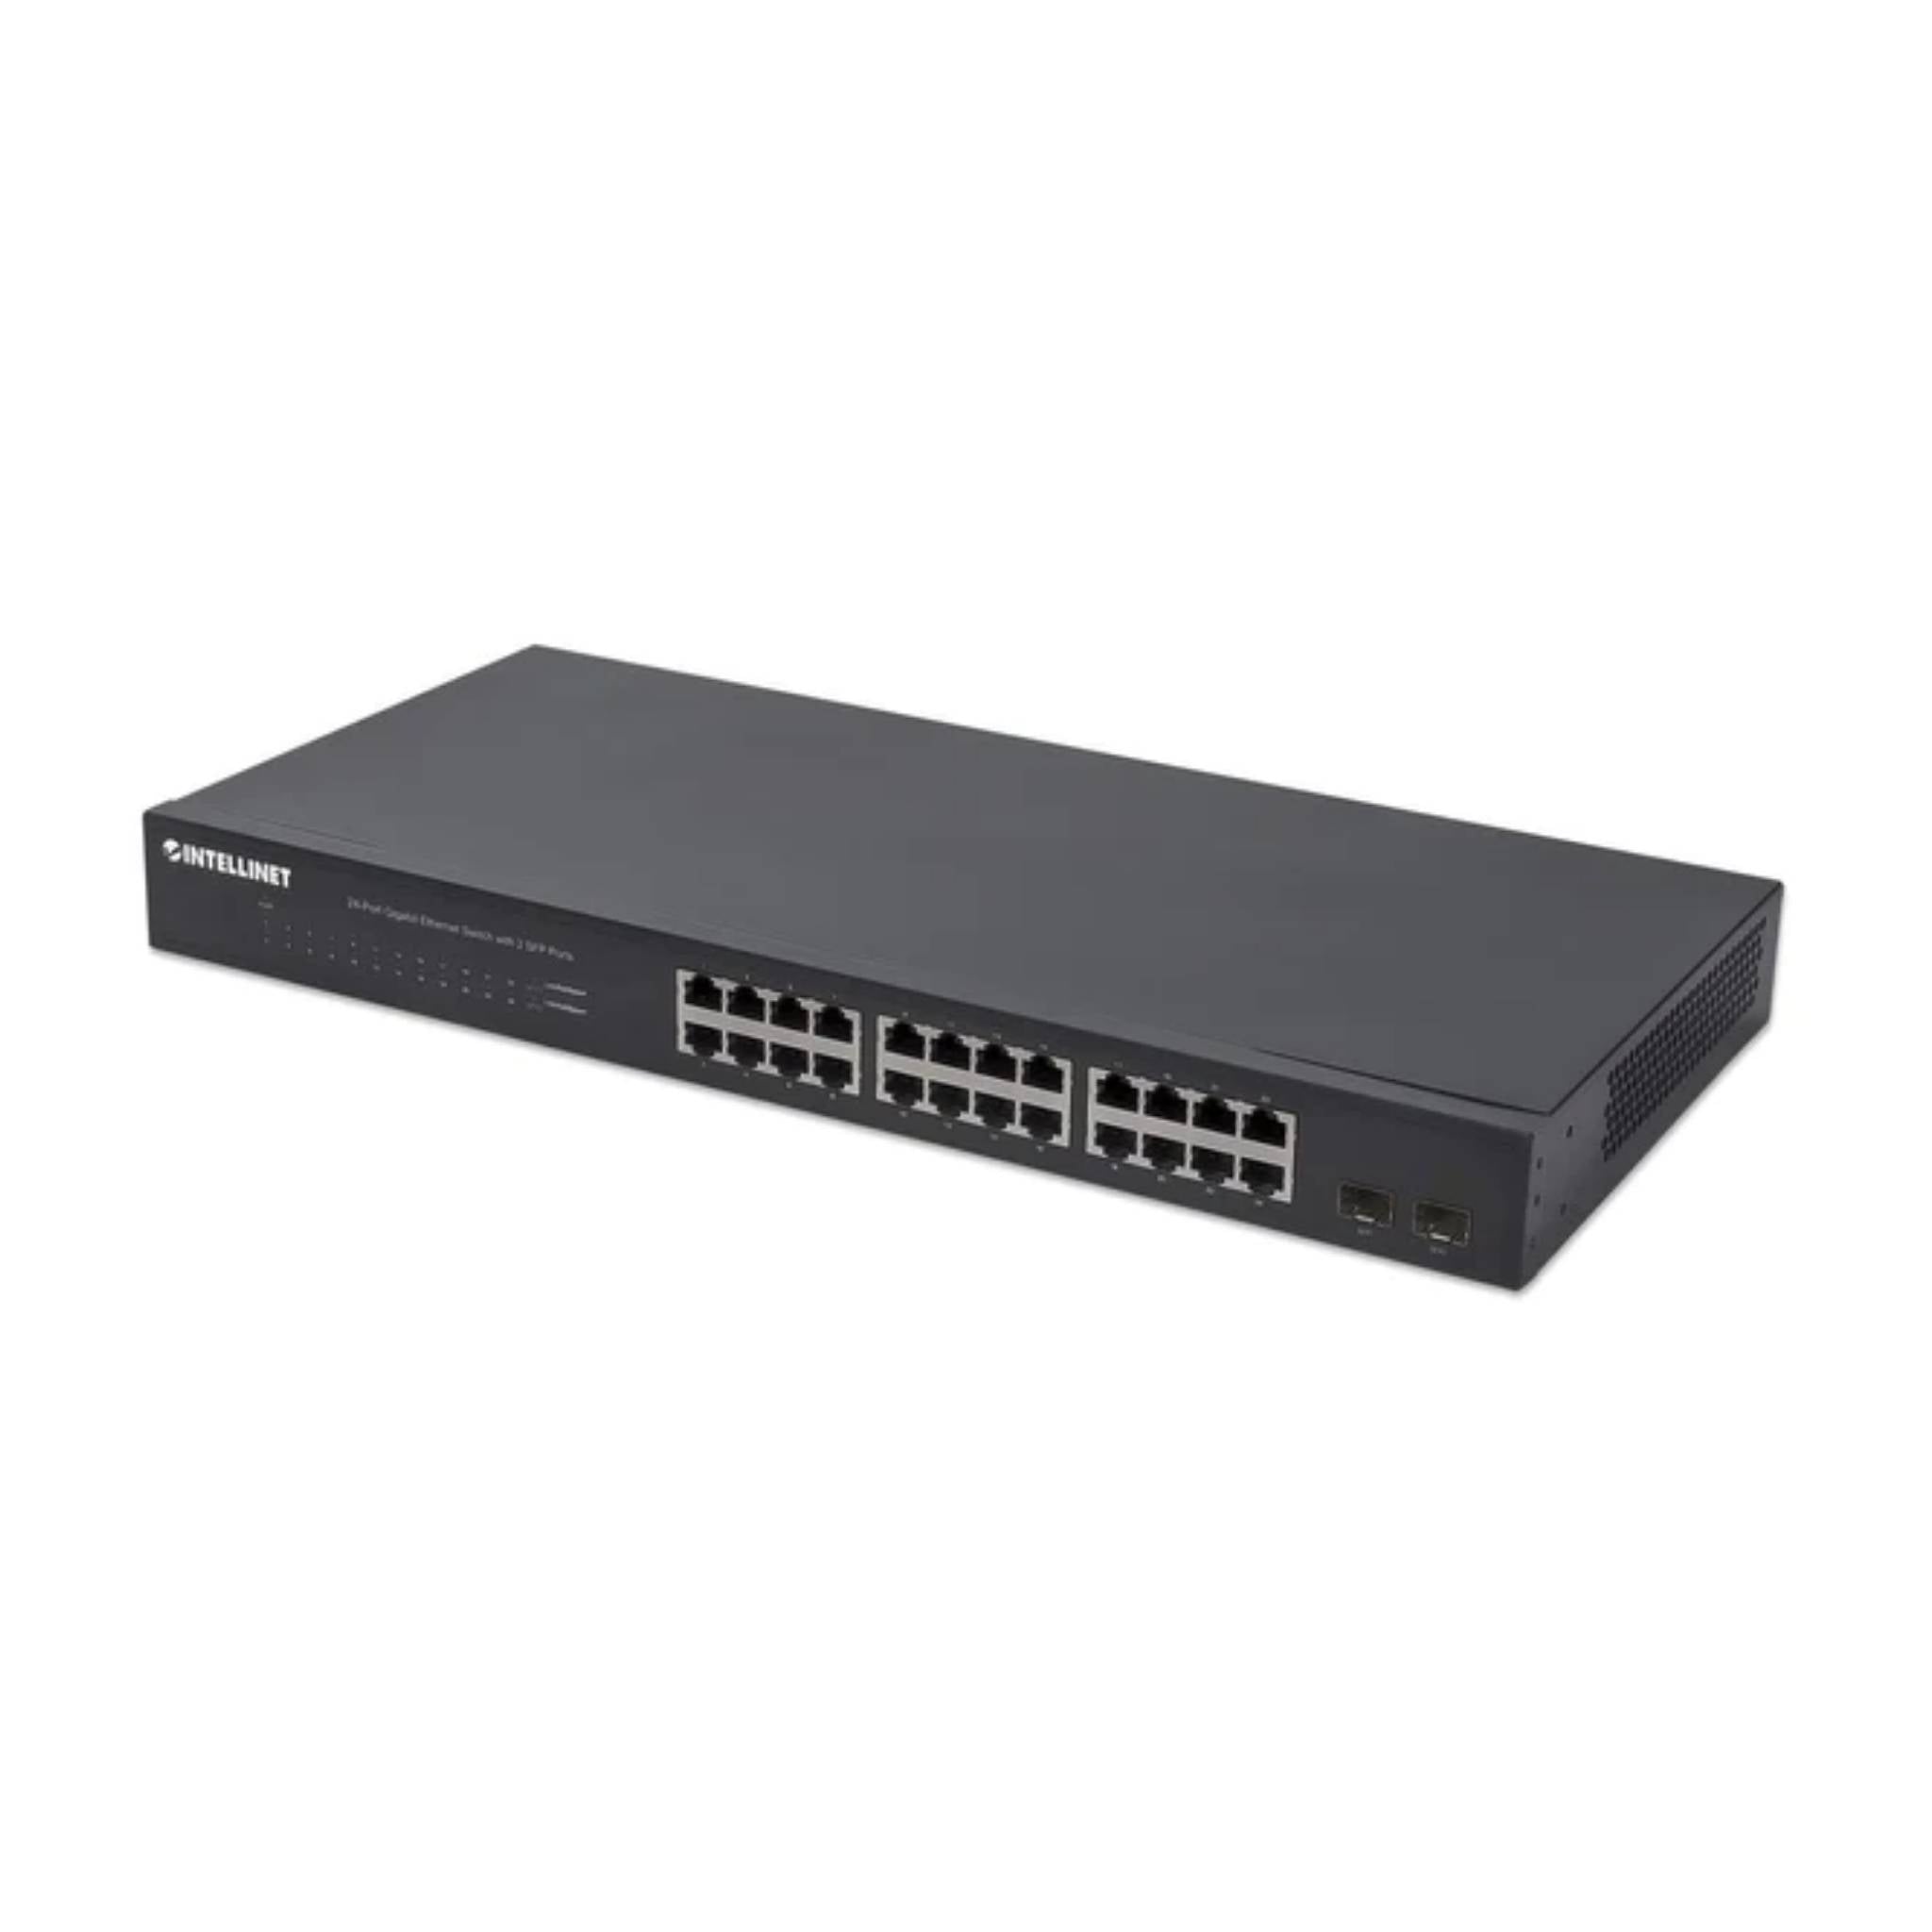 Intellinet 24-Port Gigabit Ethernet Switch with 2 SFP Ports